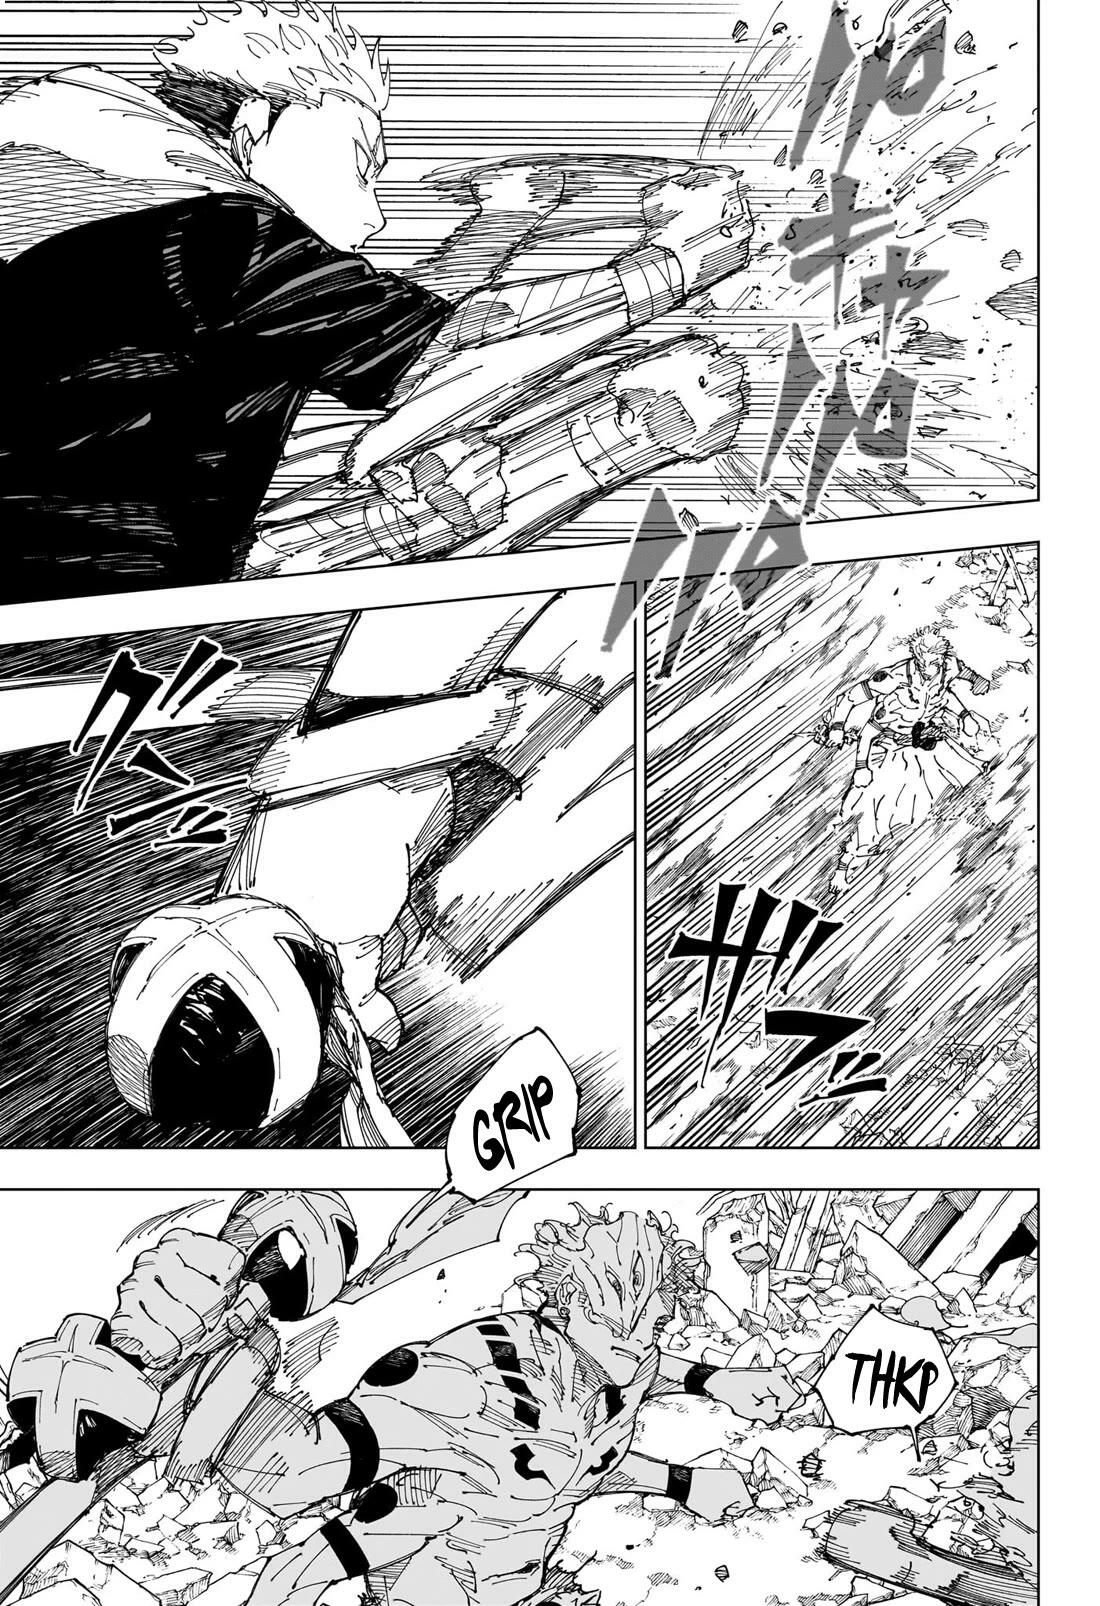 Jujutsu Kaisen Chapter 244: The Decisive Battle In The Uninhabited, Demon-Infested Shinjuku ⑯ page 16 - Mangakakalot